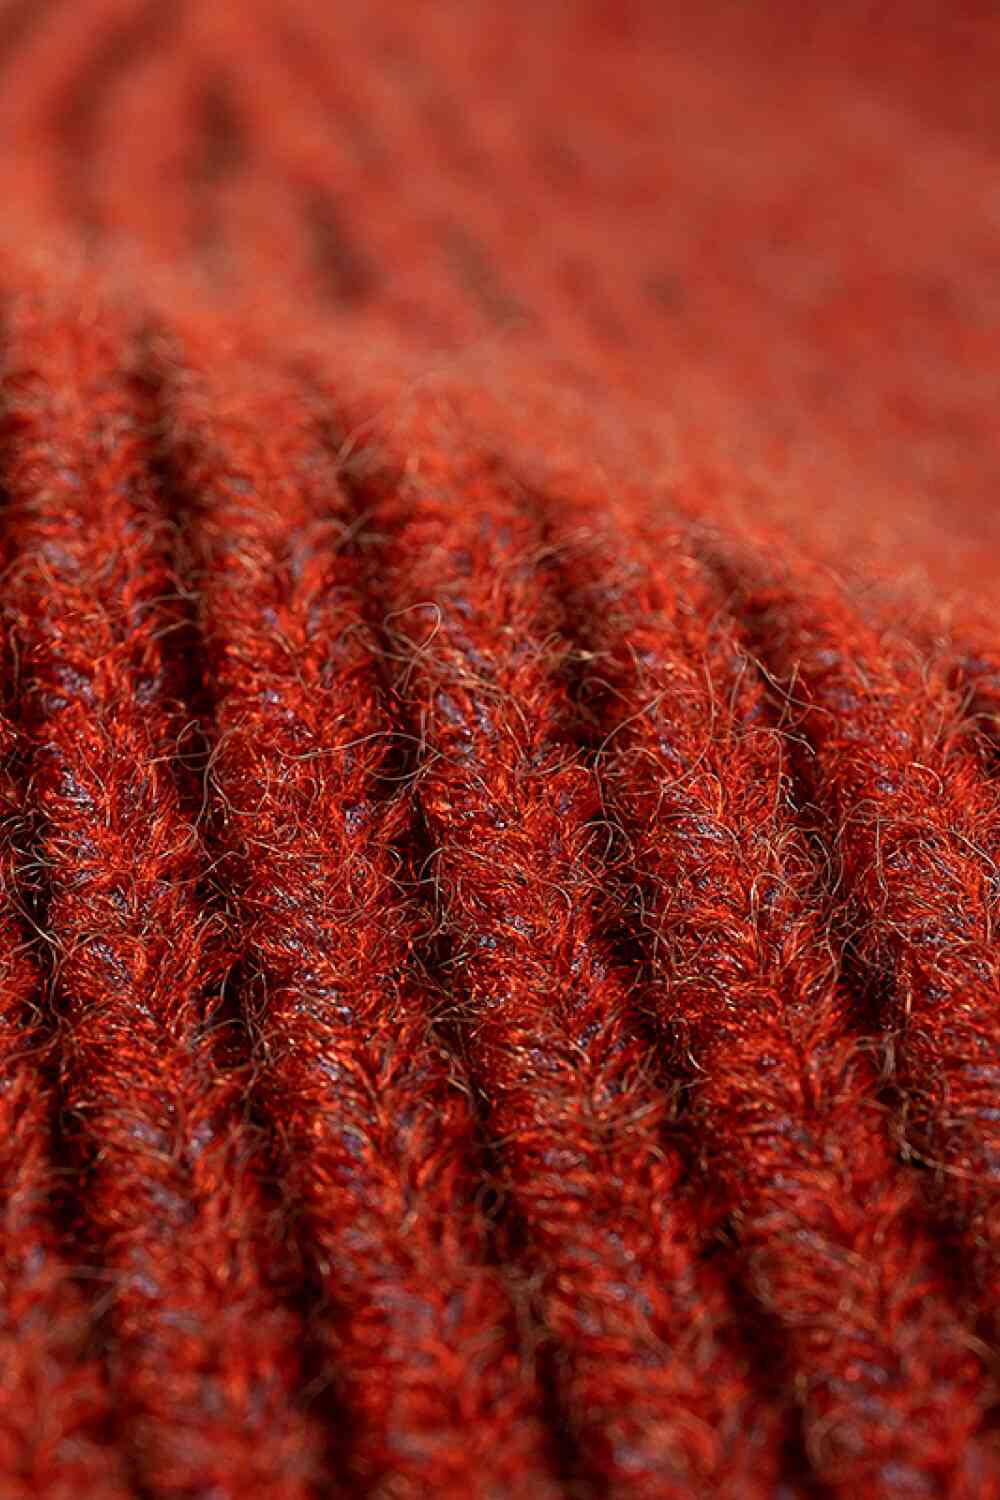 Brown NEWYORK Patch Rib-Knit Cuffed Beanie Winter Accessories